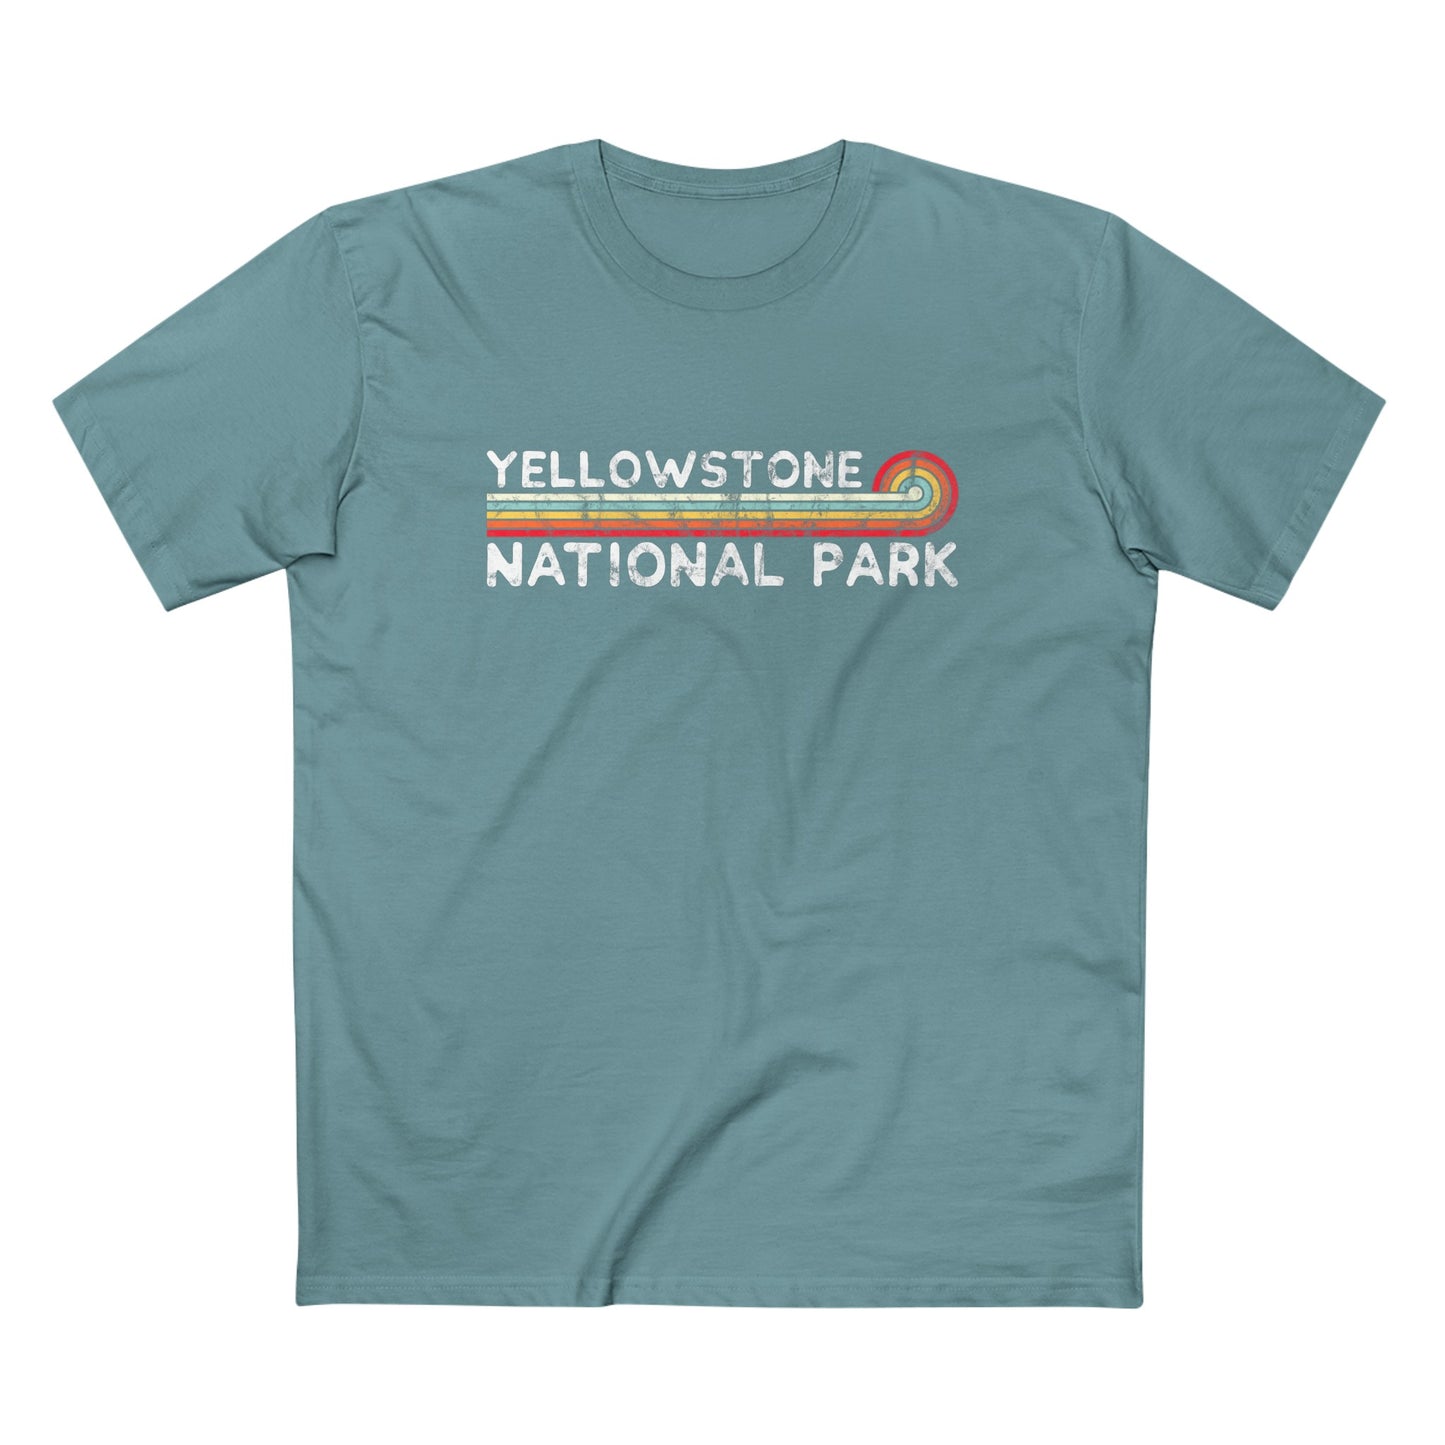 Yellowstone National Park T-Shirt - Vintage Stretched Sunrise